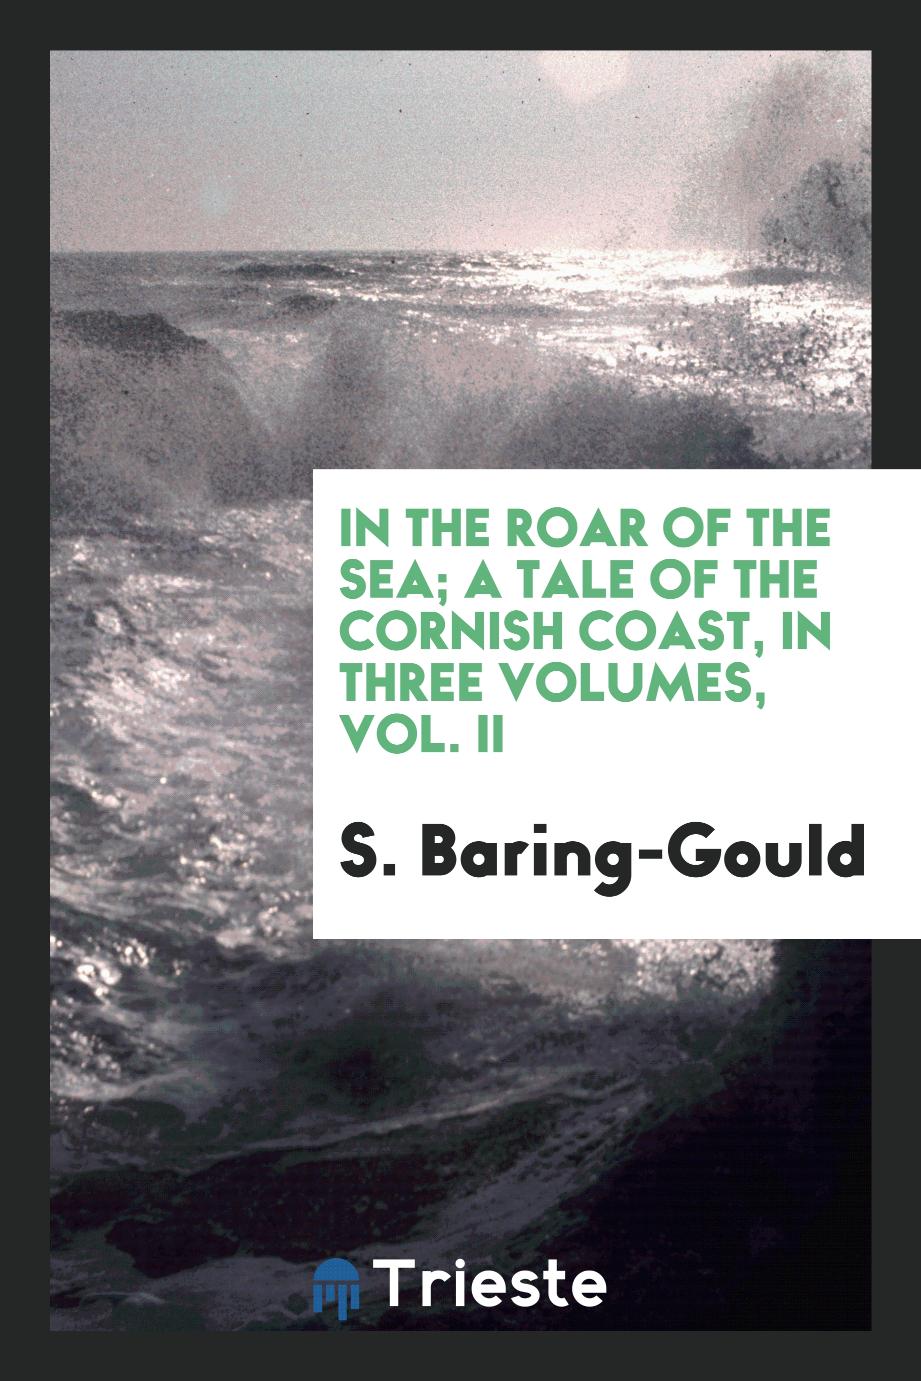 In the roar of the sea; a tale of the Cornish coast, in three volumes, Vol. II